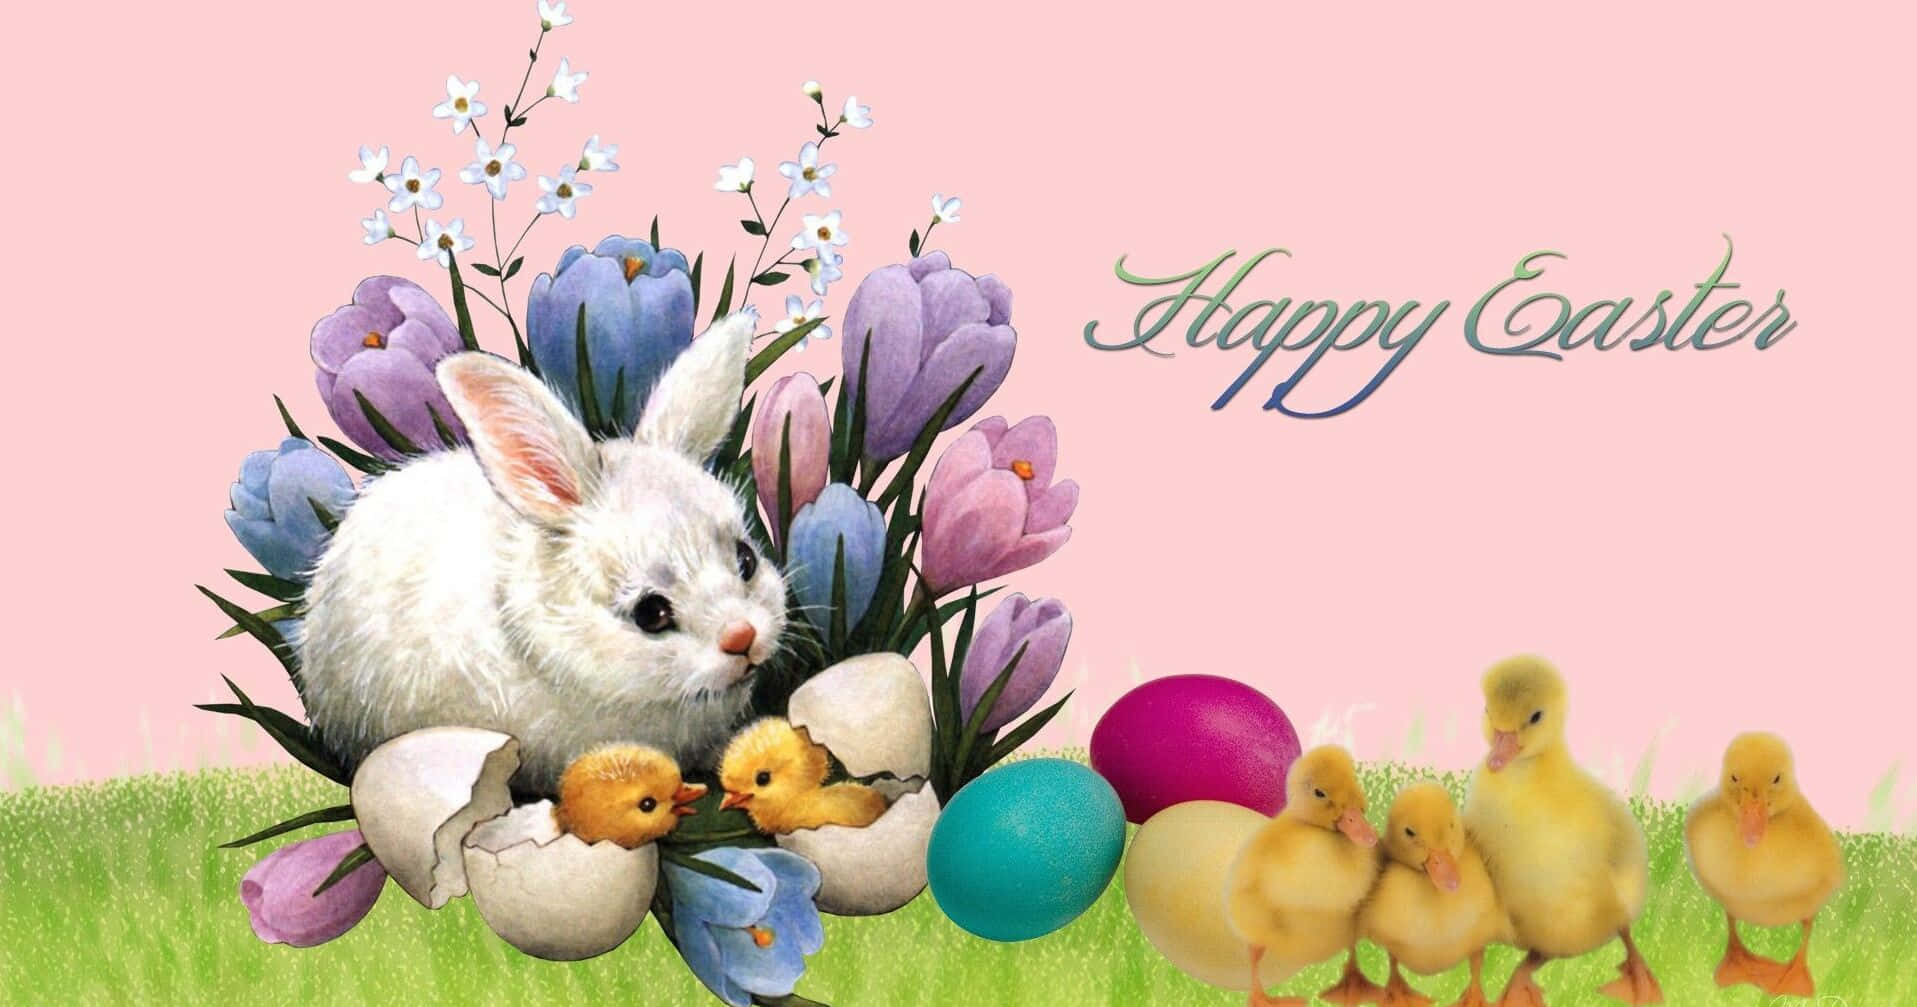 Enchanting Easter Bunny Amidst An Easter Egg Hunt